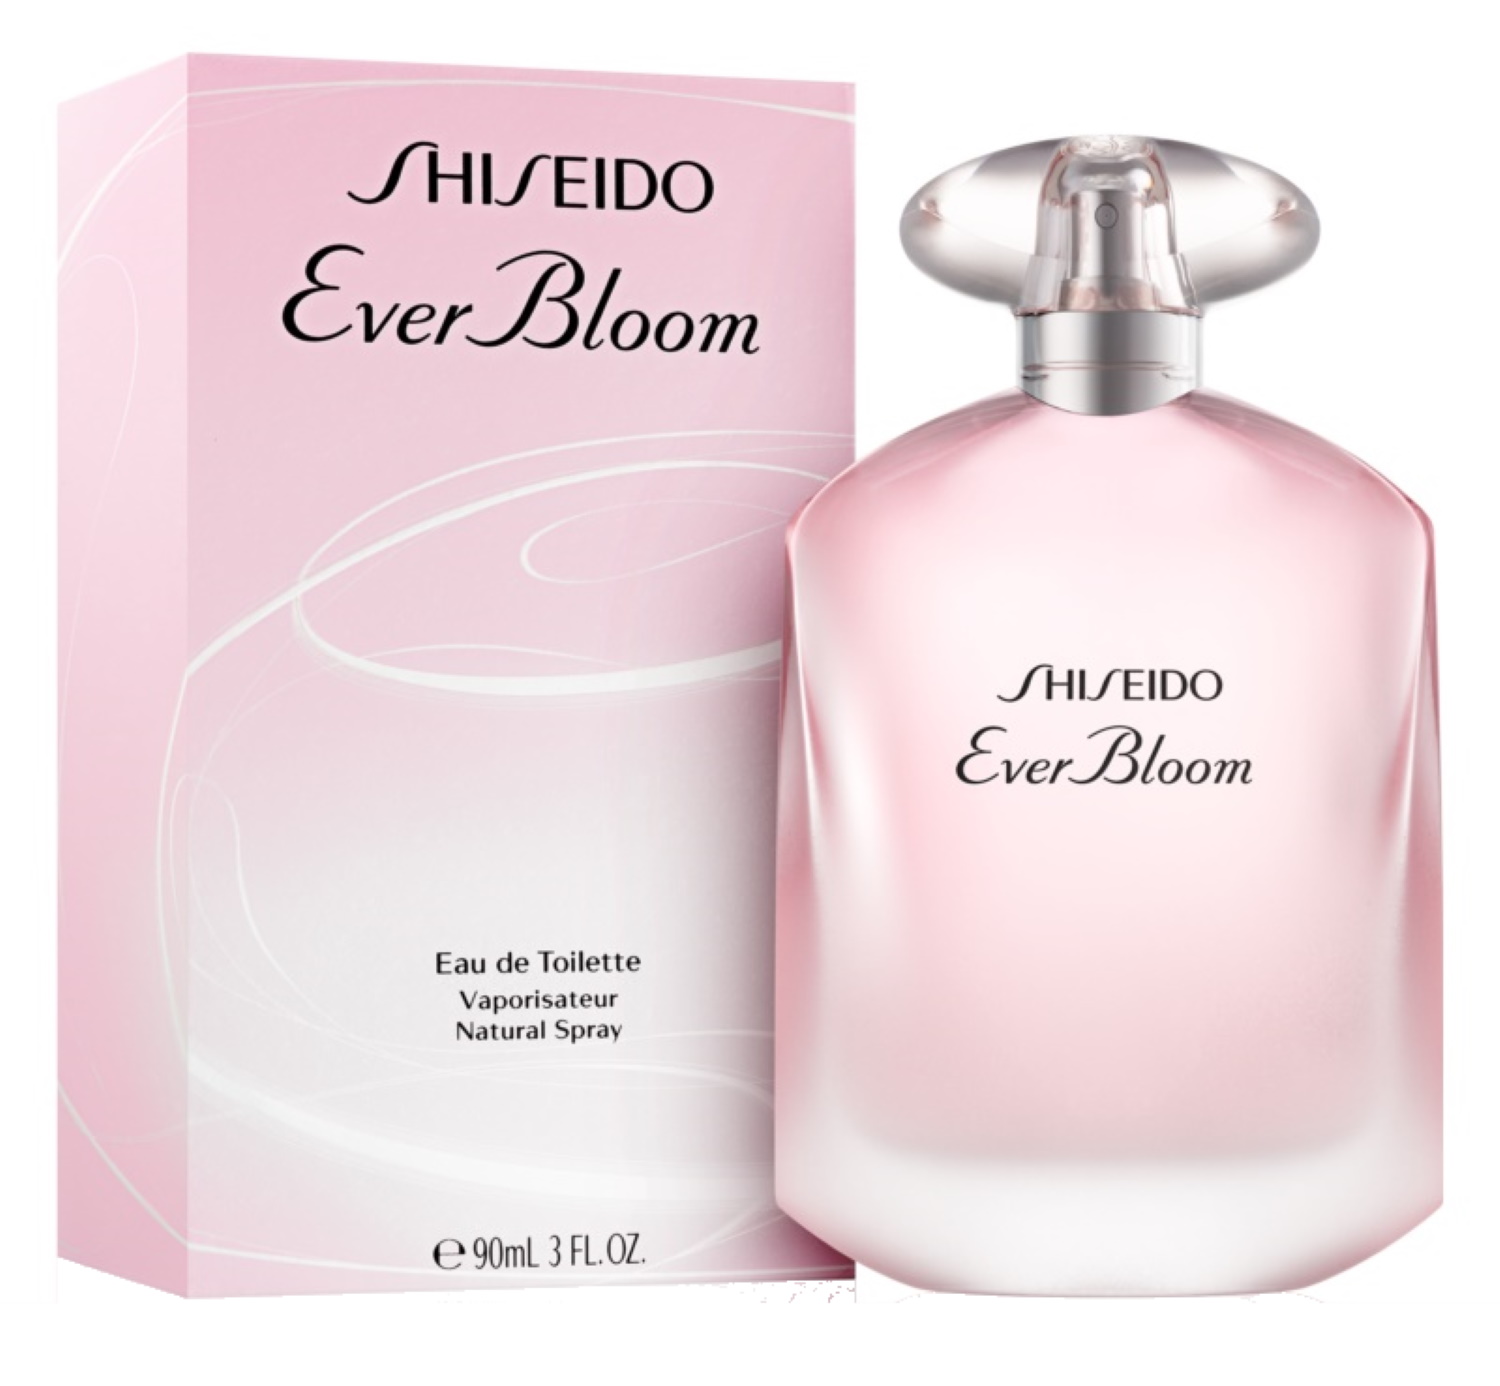 Shiseido парфюм. Туалетная вода Shiseido ever Bloom. Туалетная вода шисейдо Эвер Блум. Духи шисейдо Эвер Блум. Евери Блюм шоссейдо духи.